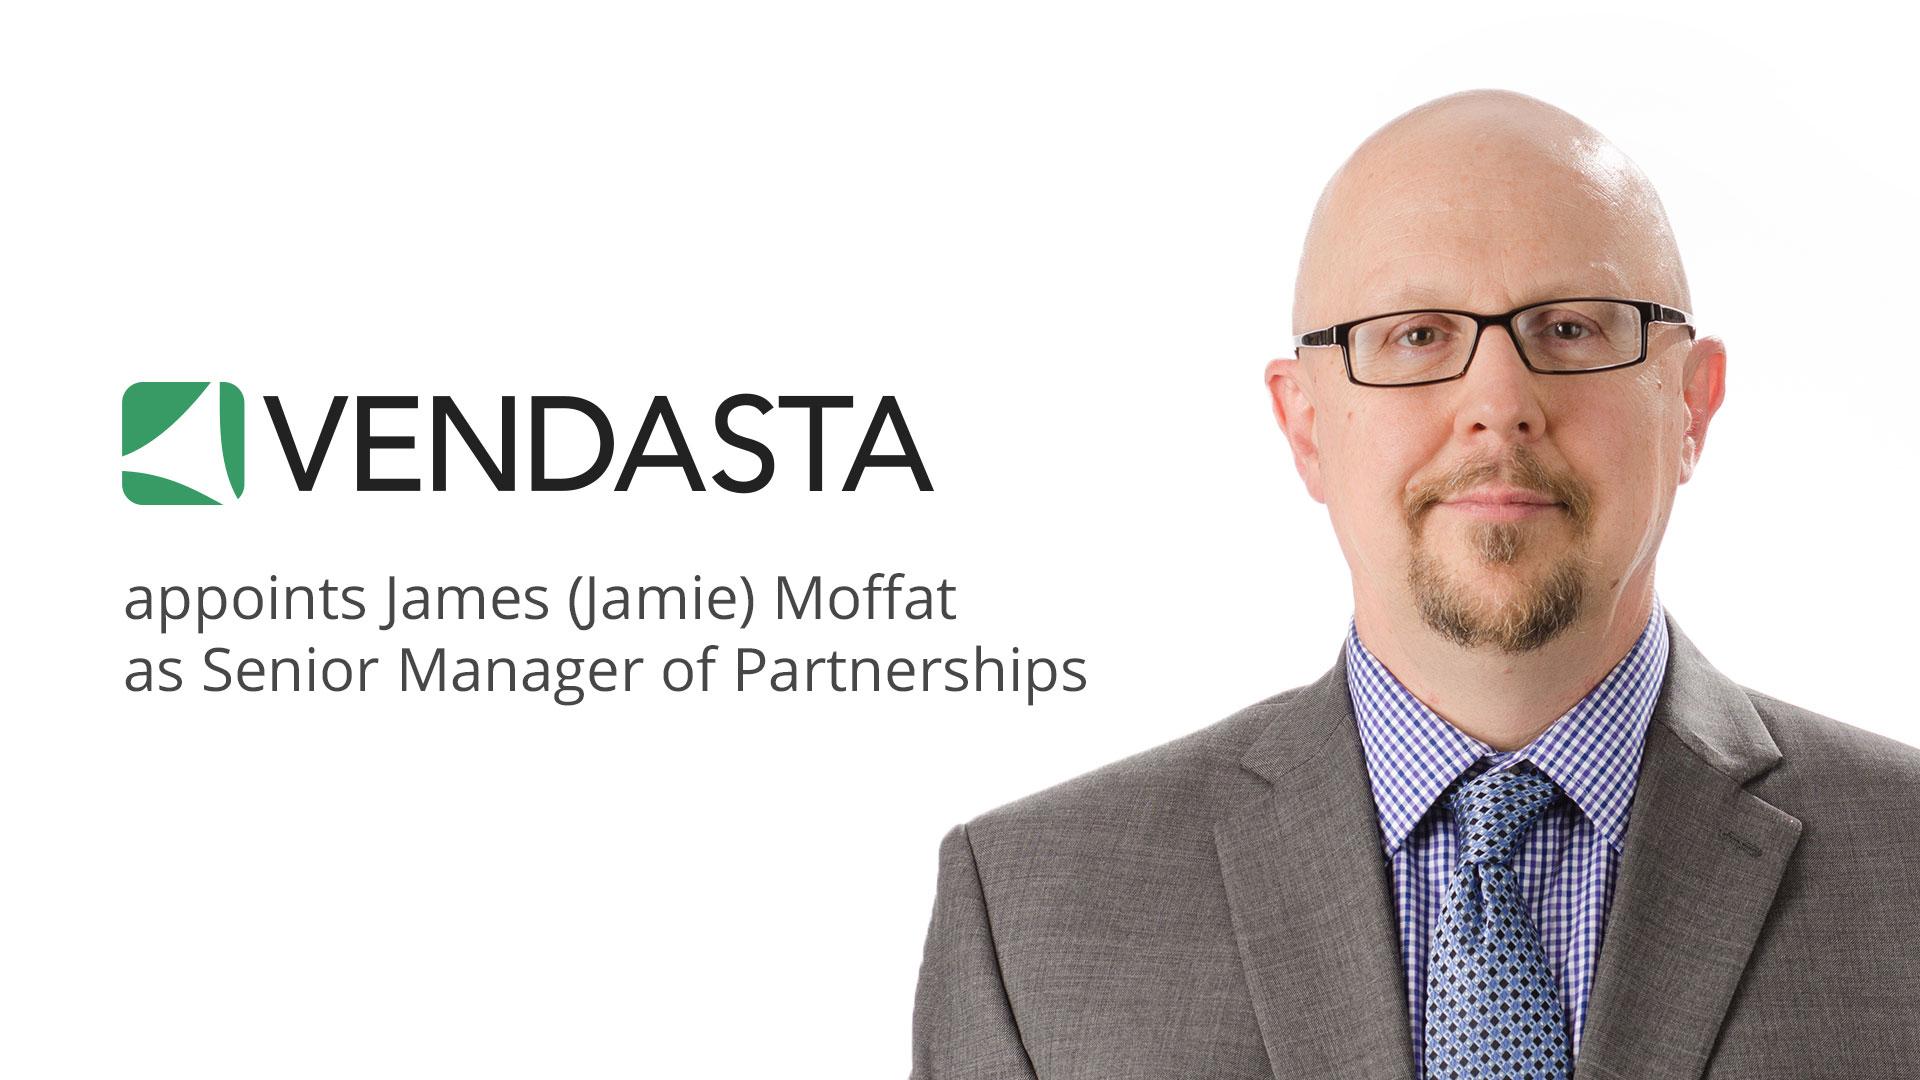 James (Jamie) Moffat, Vendasta's Senior Manager of Partnerships